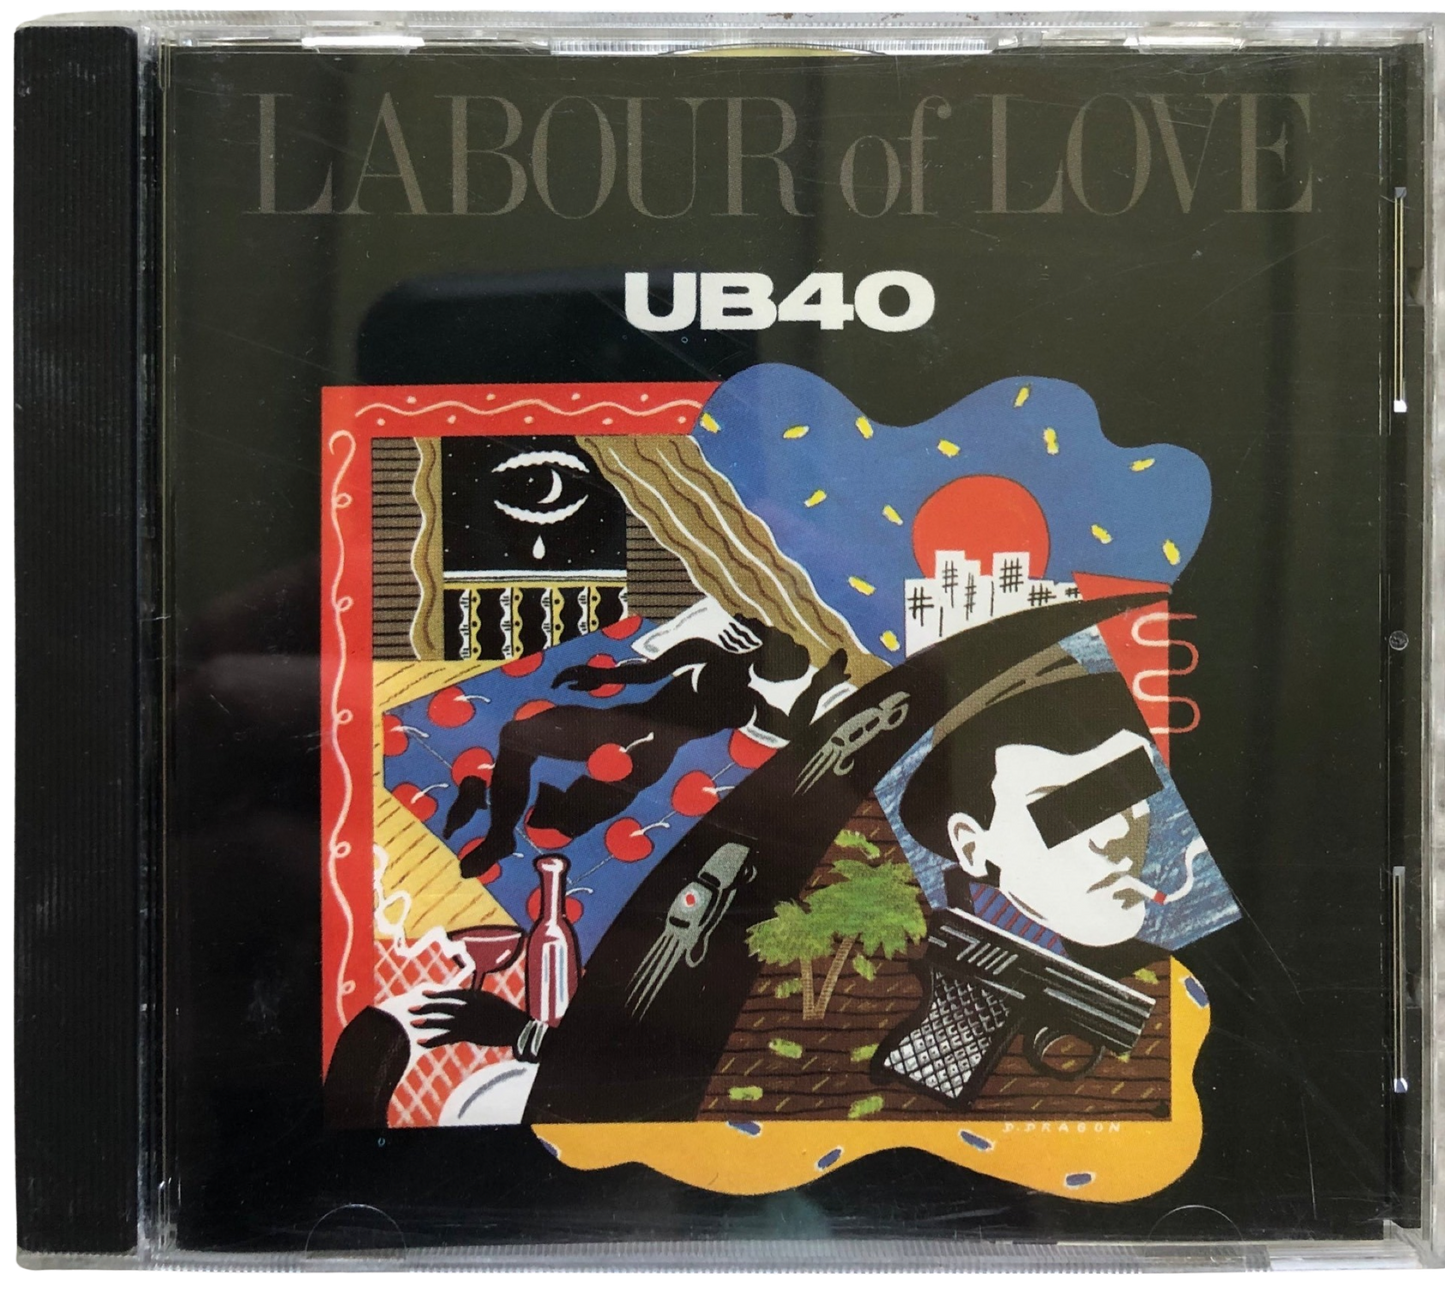 Labour of Love UB40